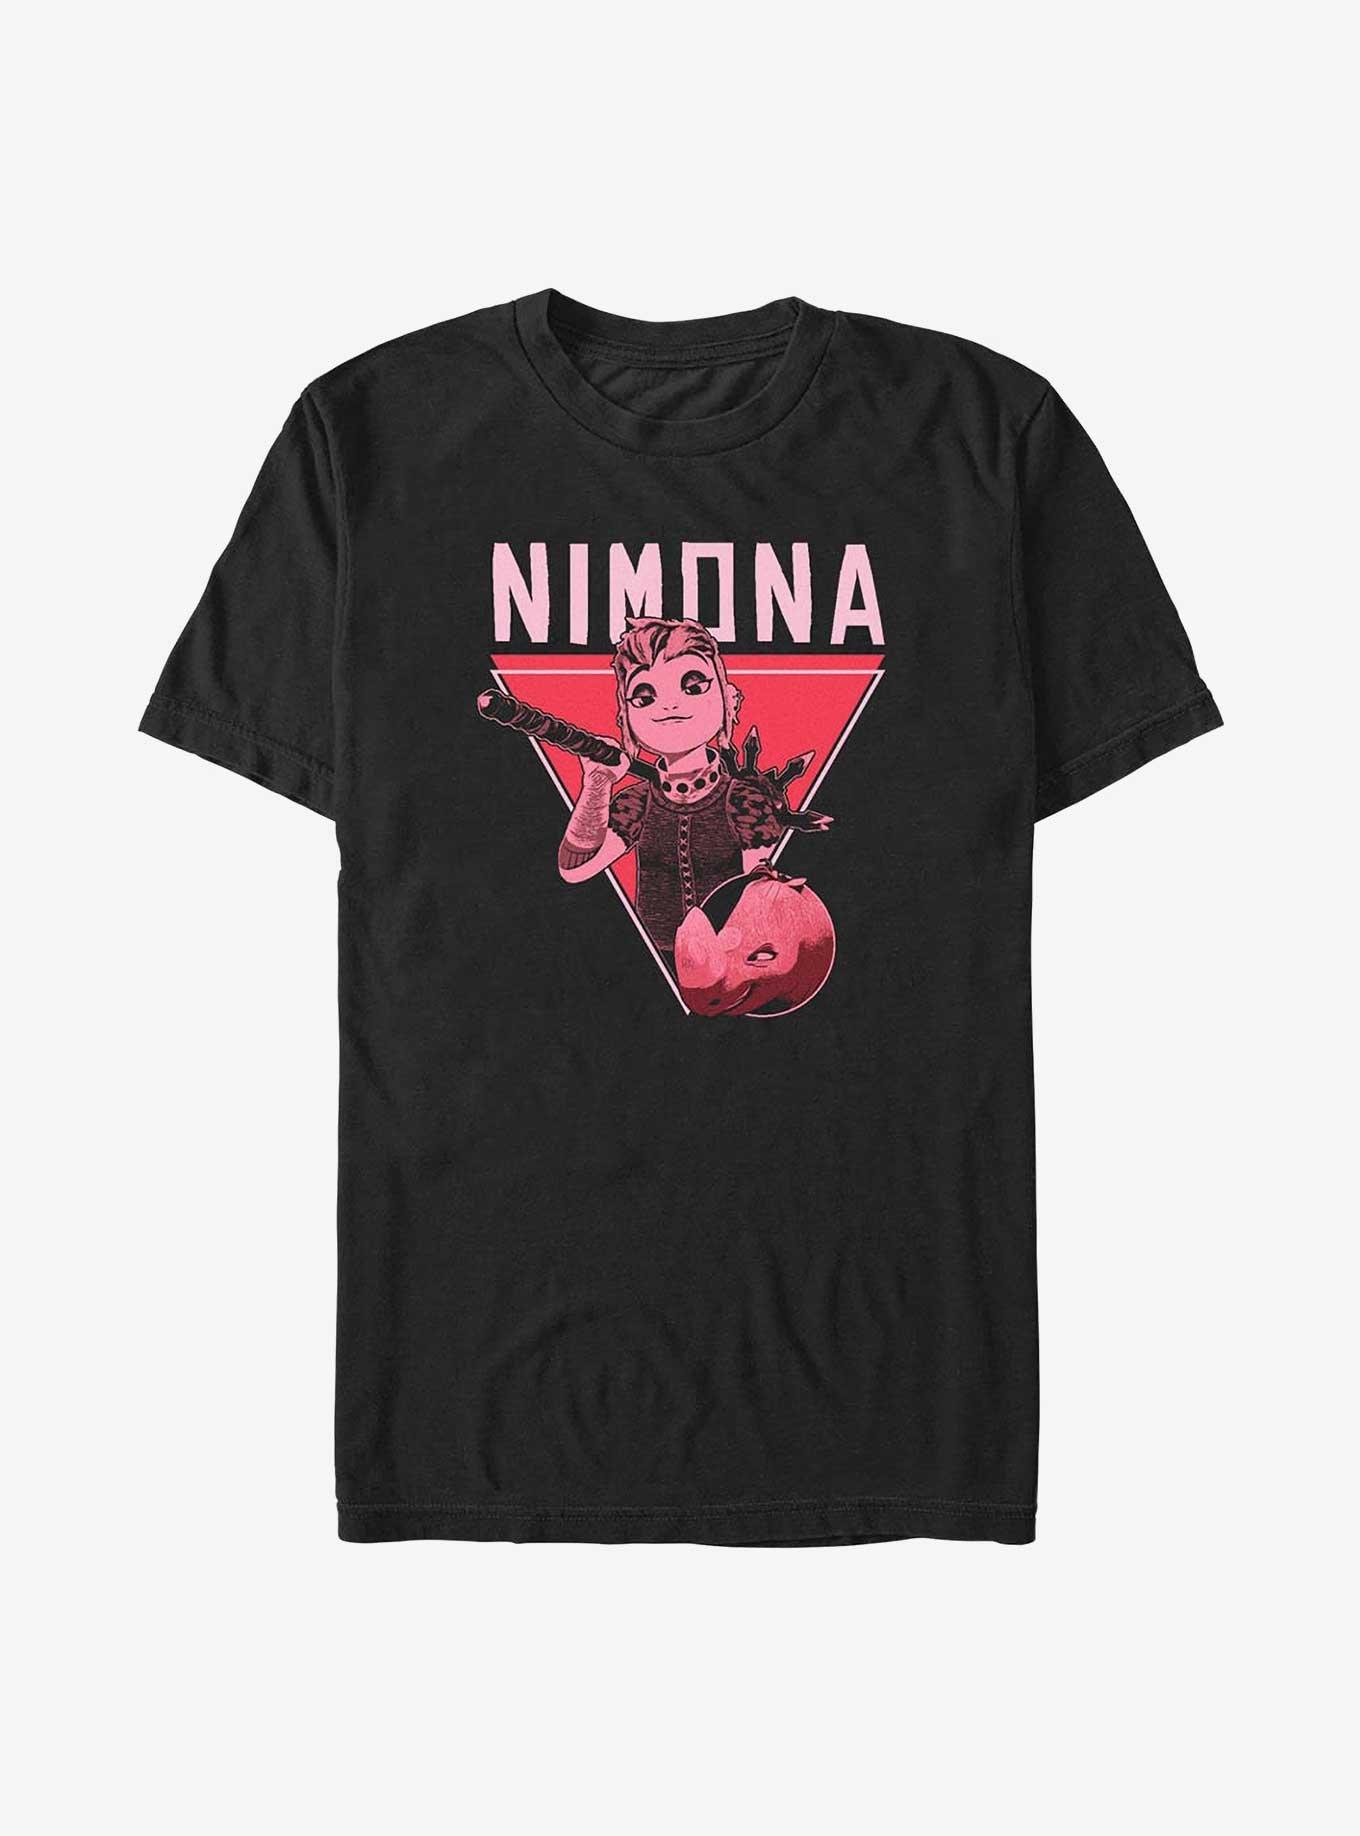 Nimona Badge T-Shirt, BLACK, hi-res